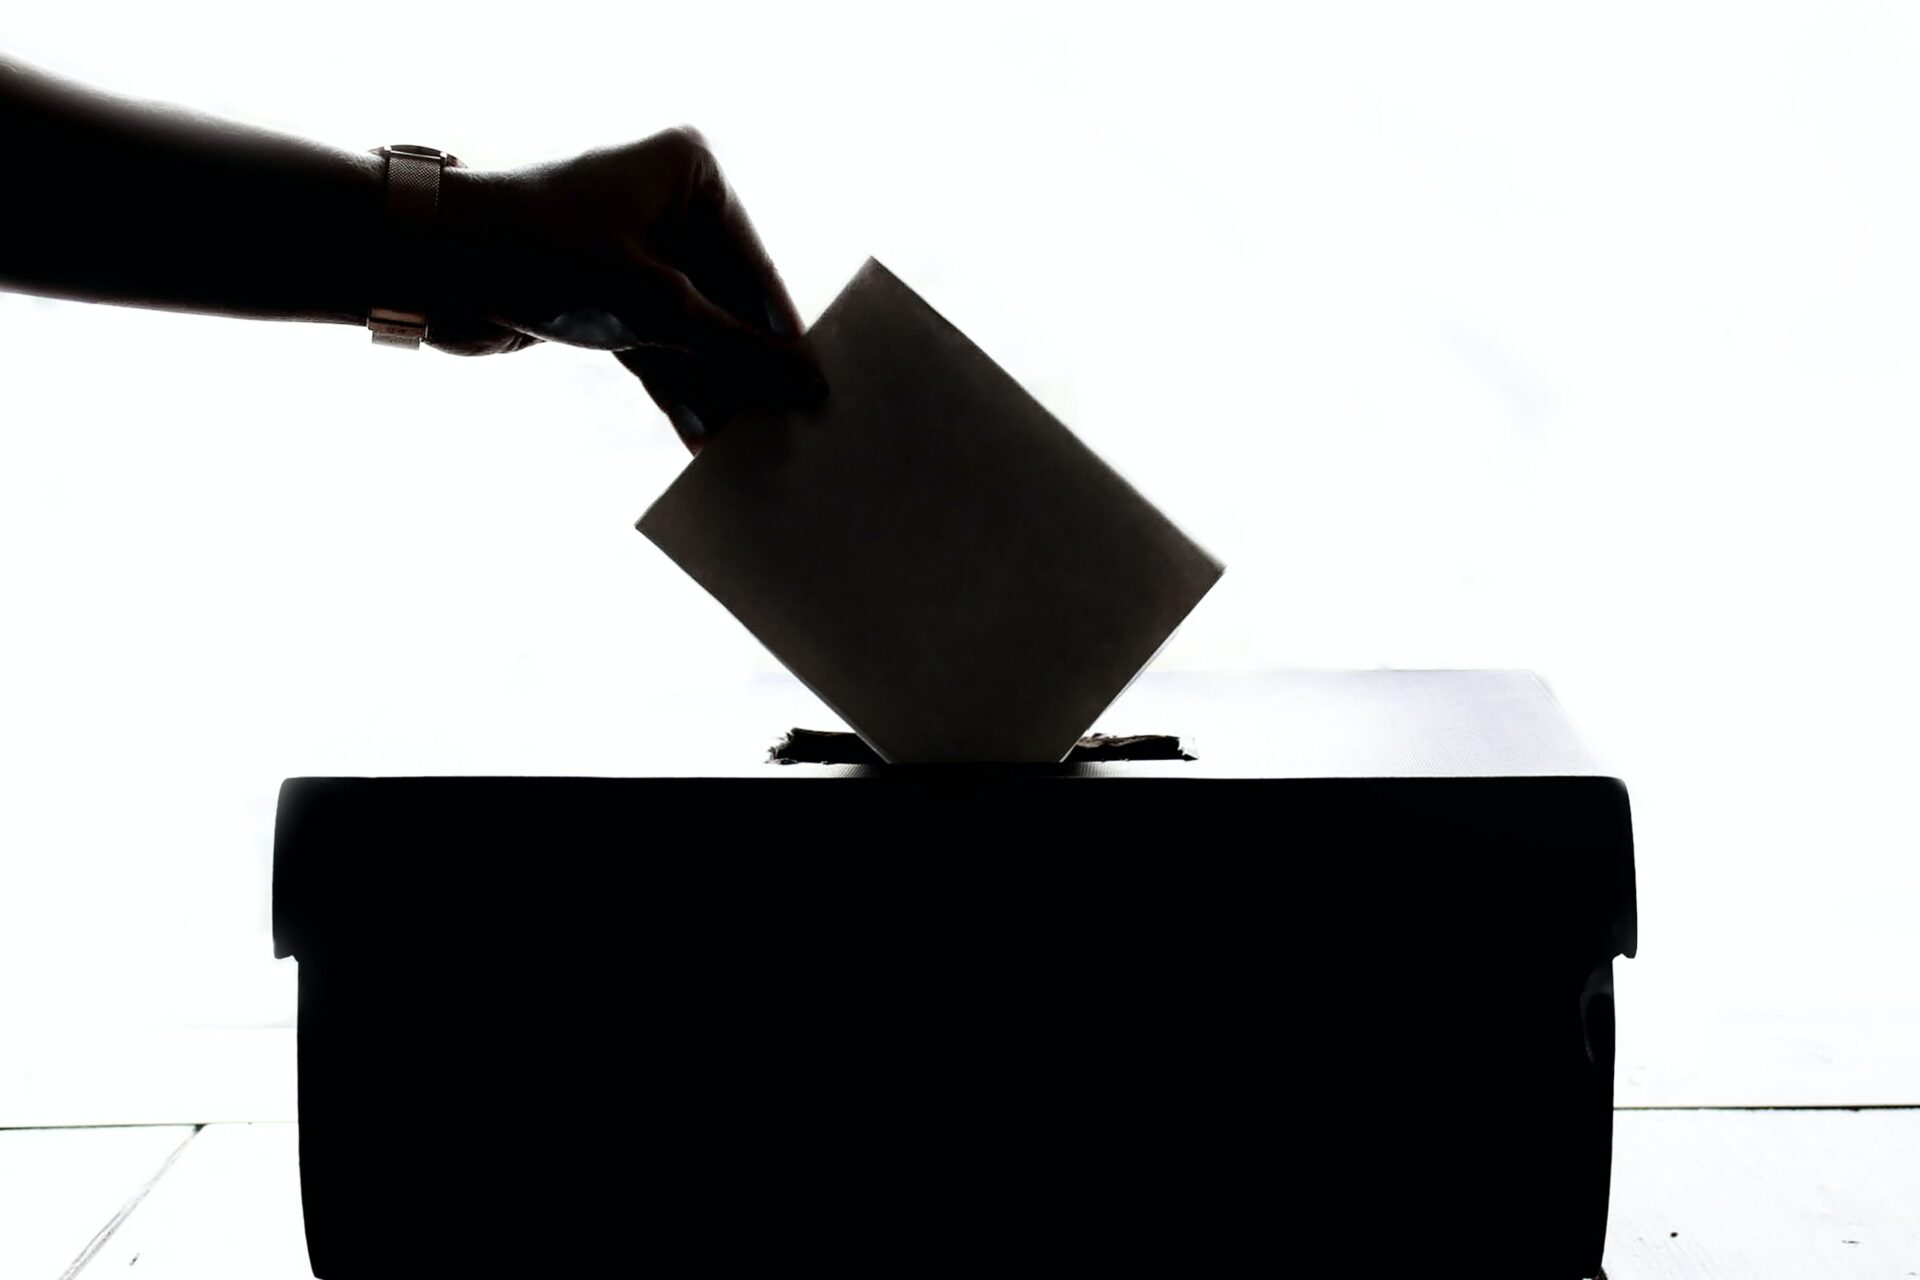 PDF) Mistrust, Disinforming News, and Vote Choice: A Panel Survey